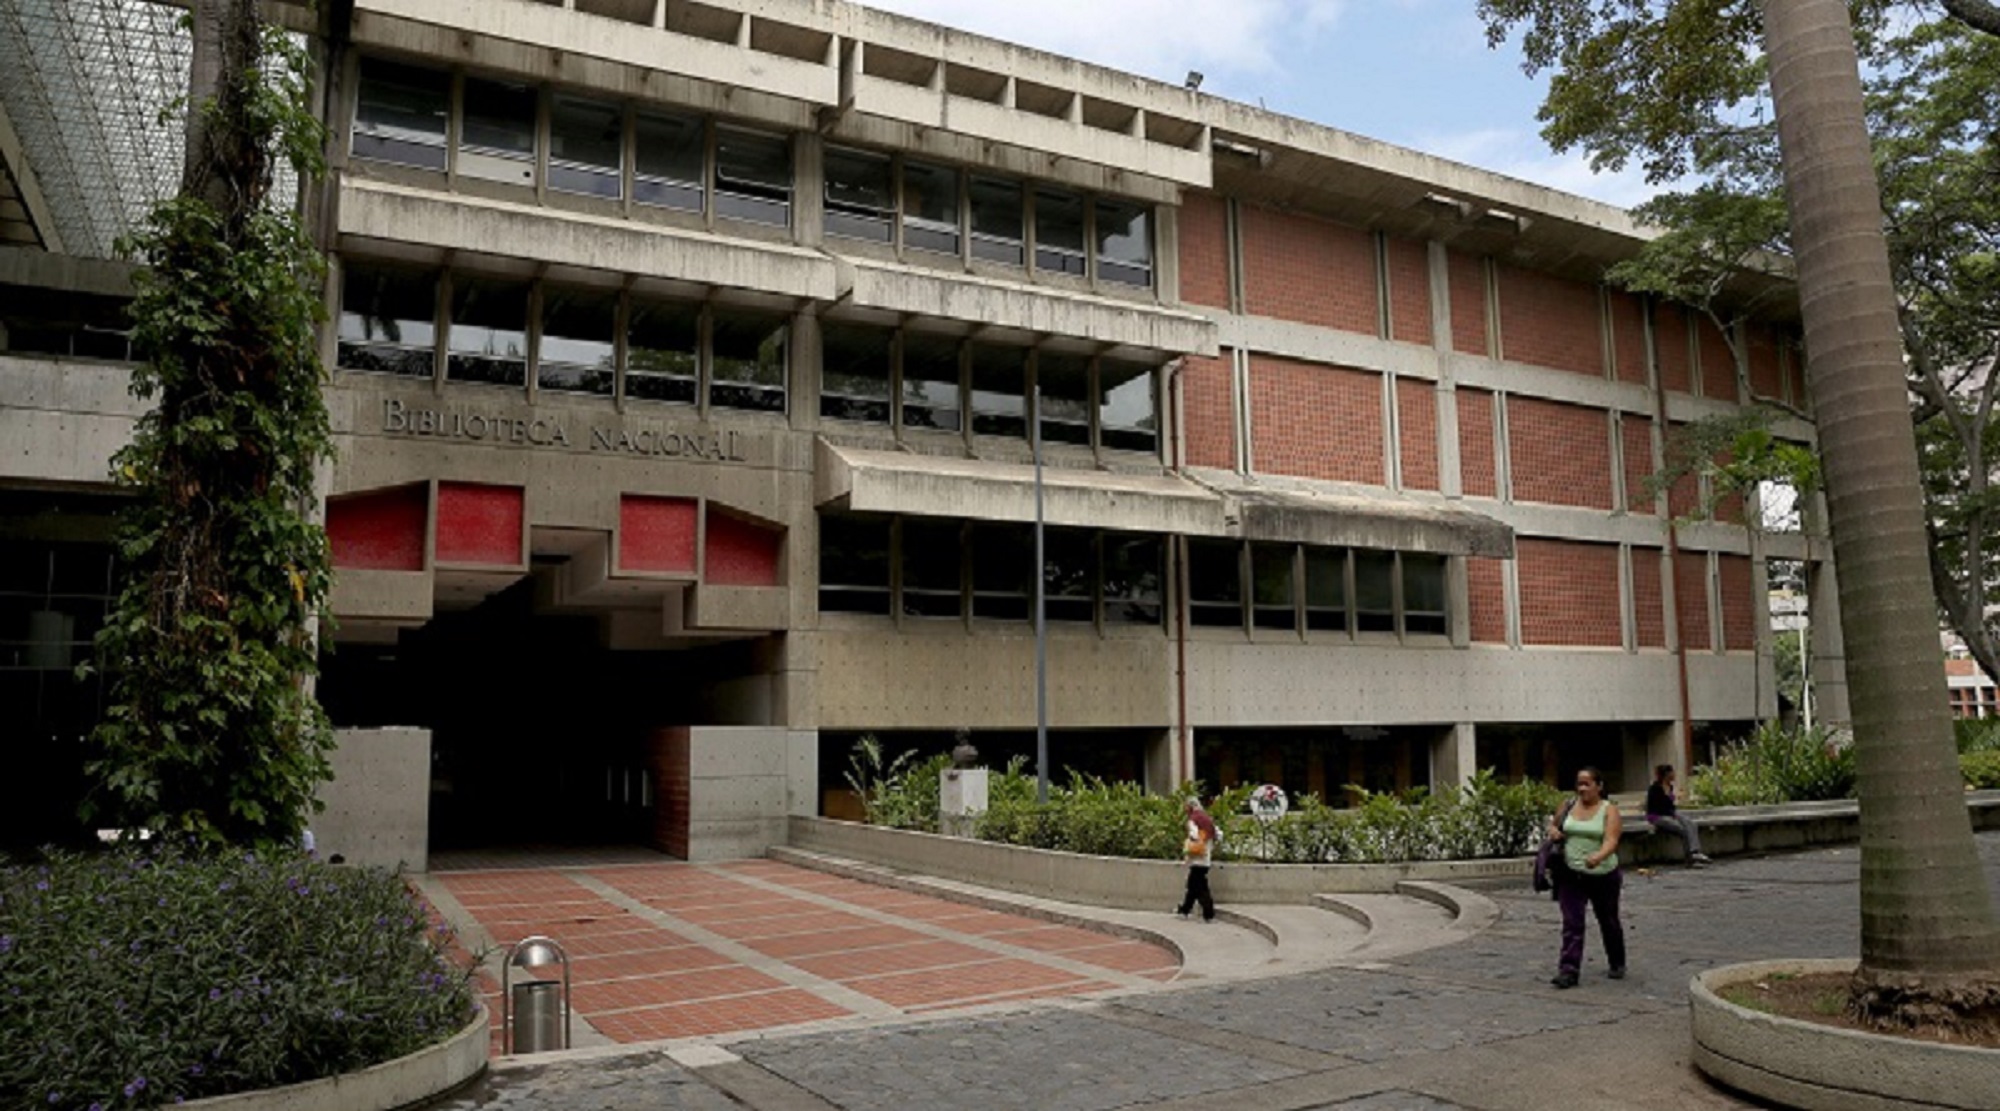 Biblioteca Nacional custodia y conserva la memoria venezolana